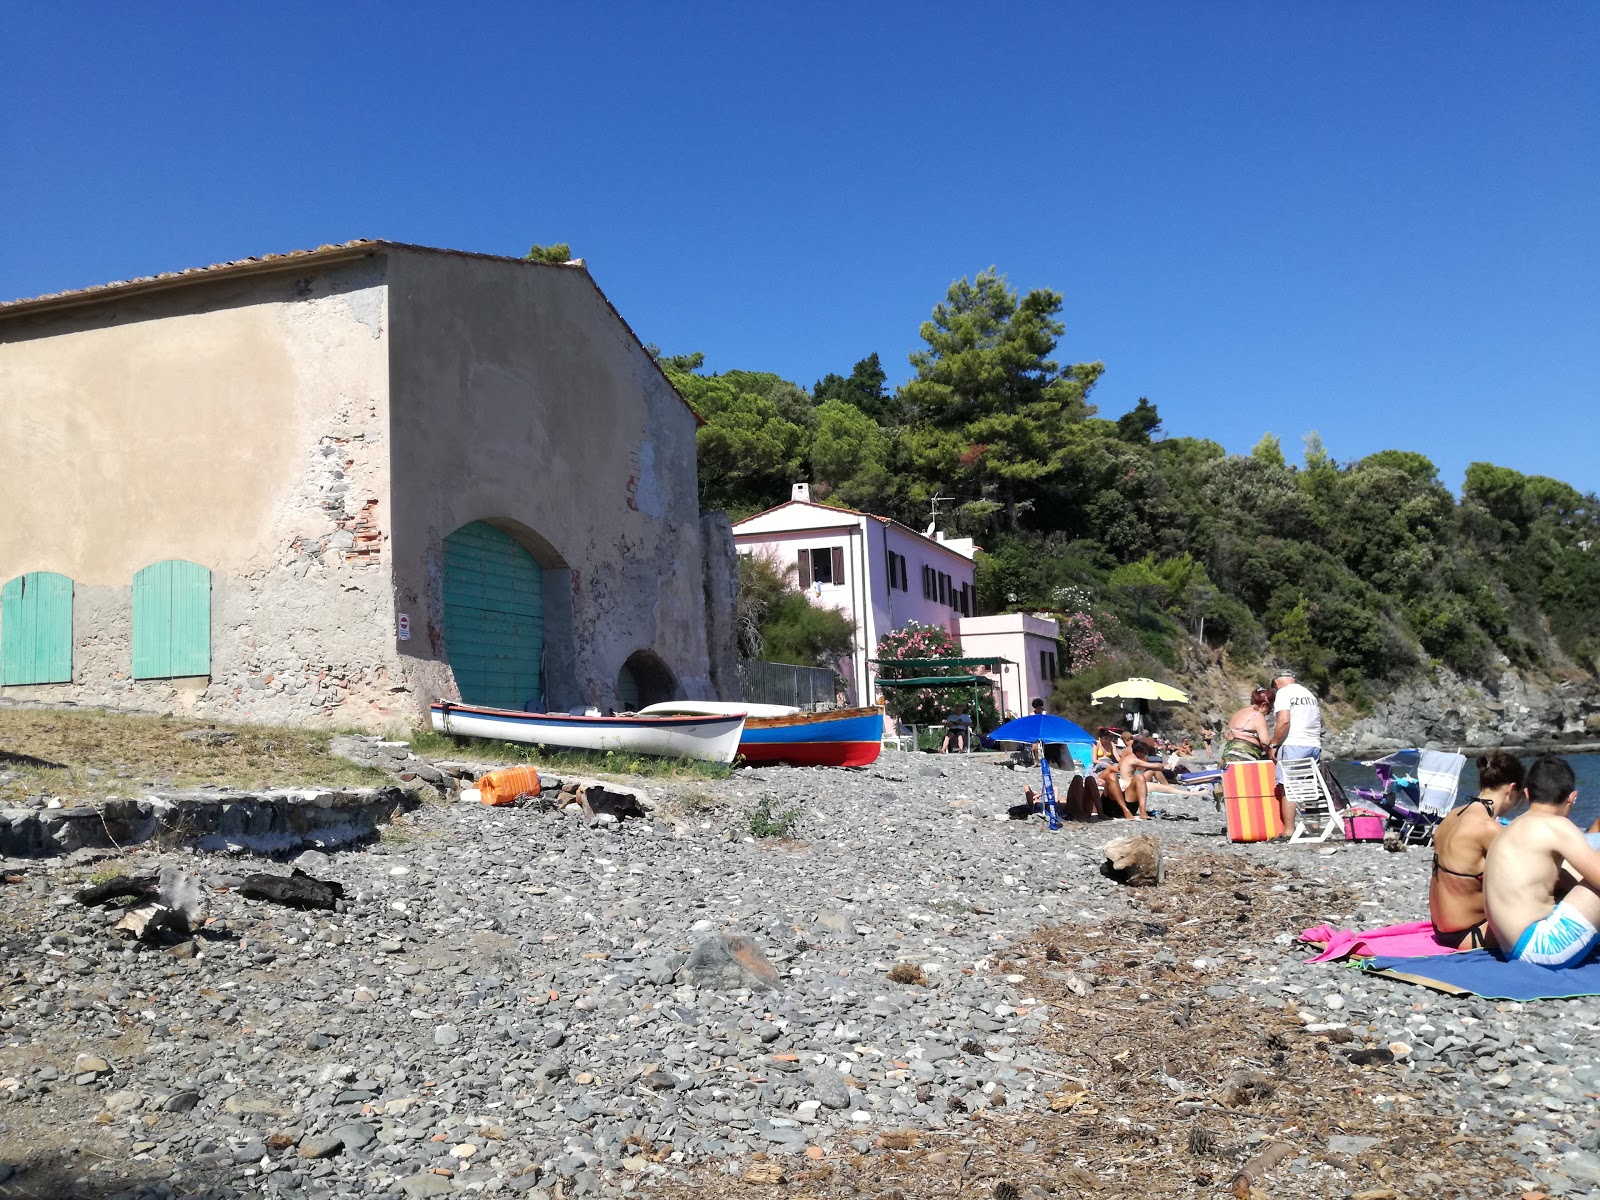 Foto von Spiaggia del Bagno wilde gegend